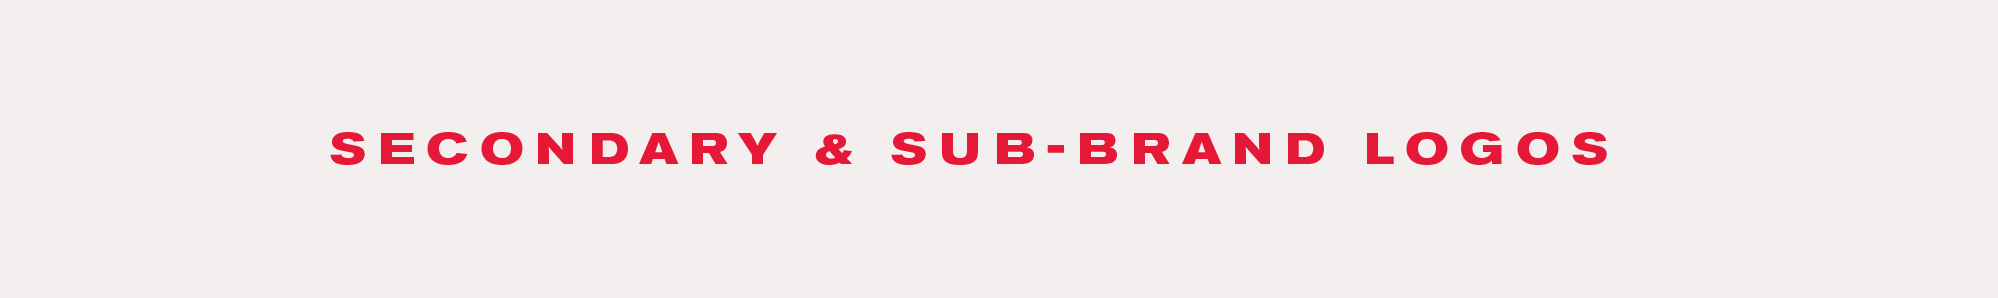 sub-brand logo designs